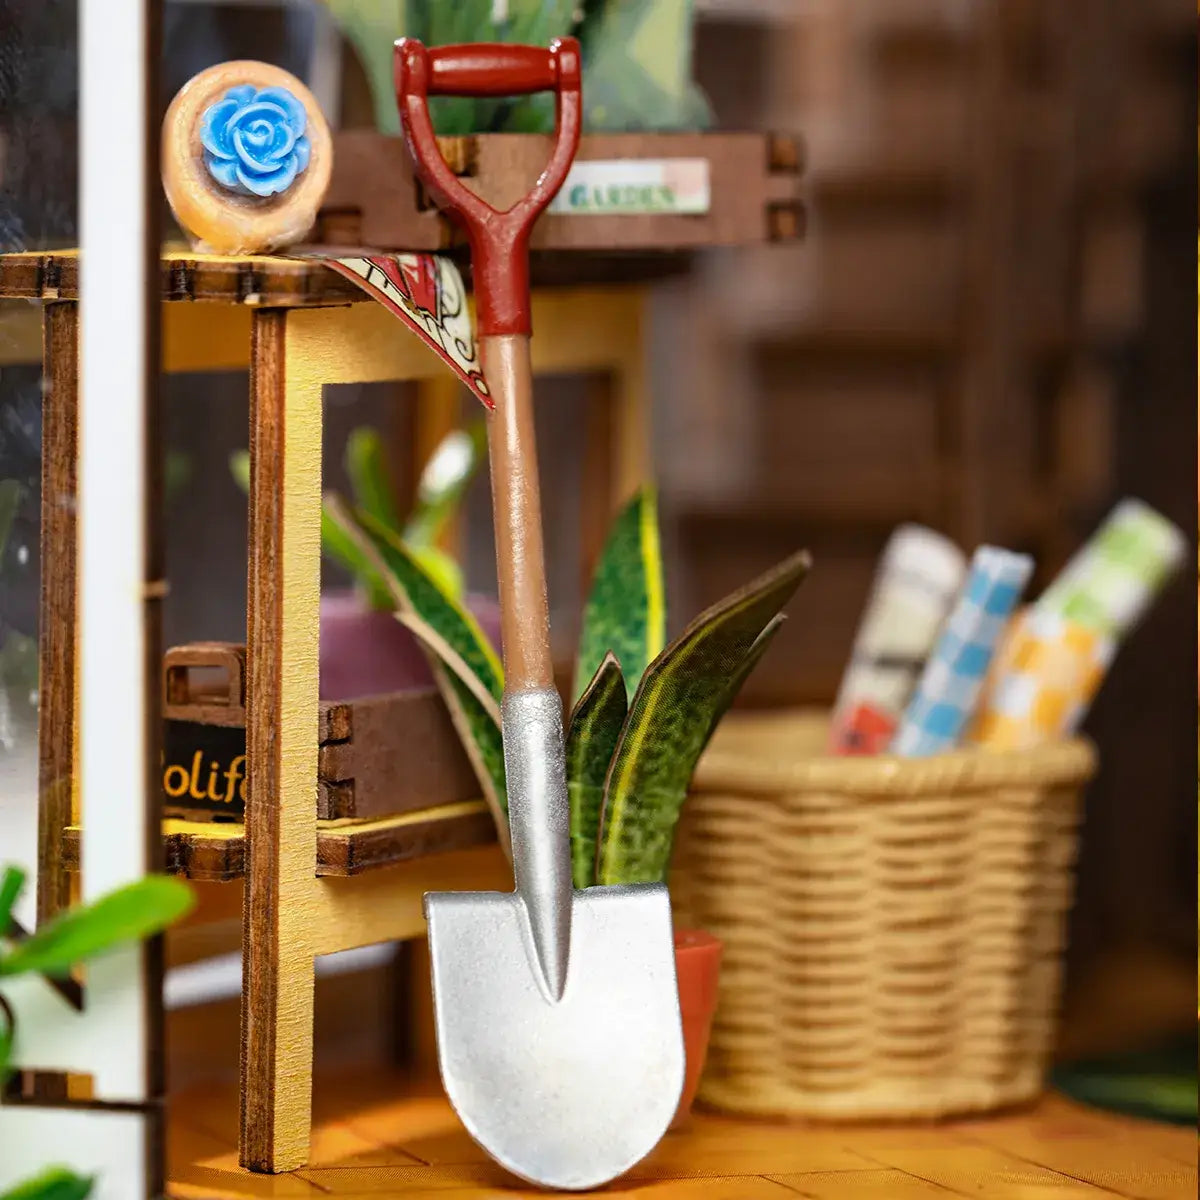 Garden House 3D Wooden DIY Book Nook - Hivkef